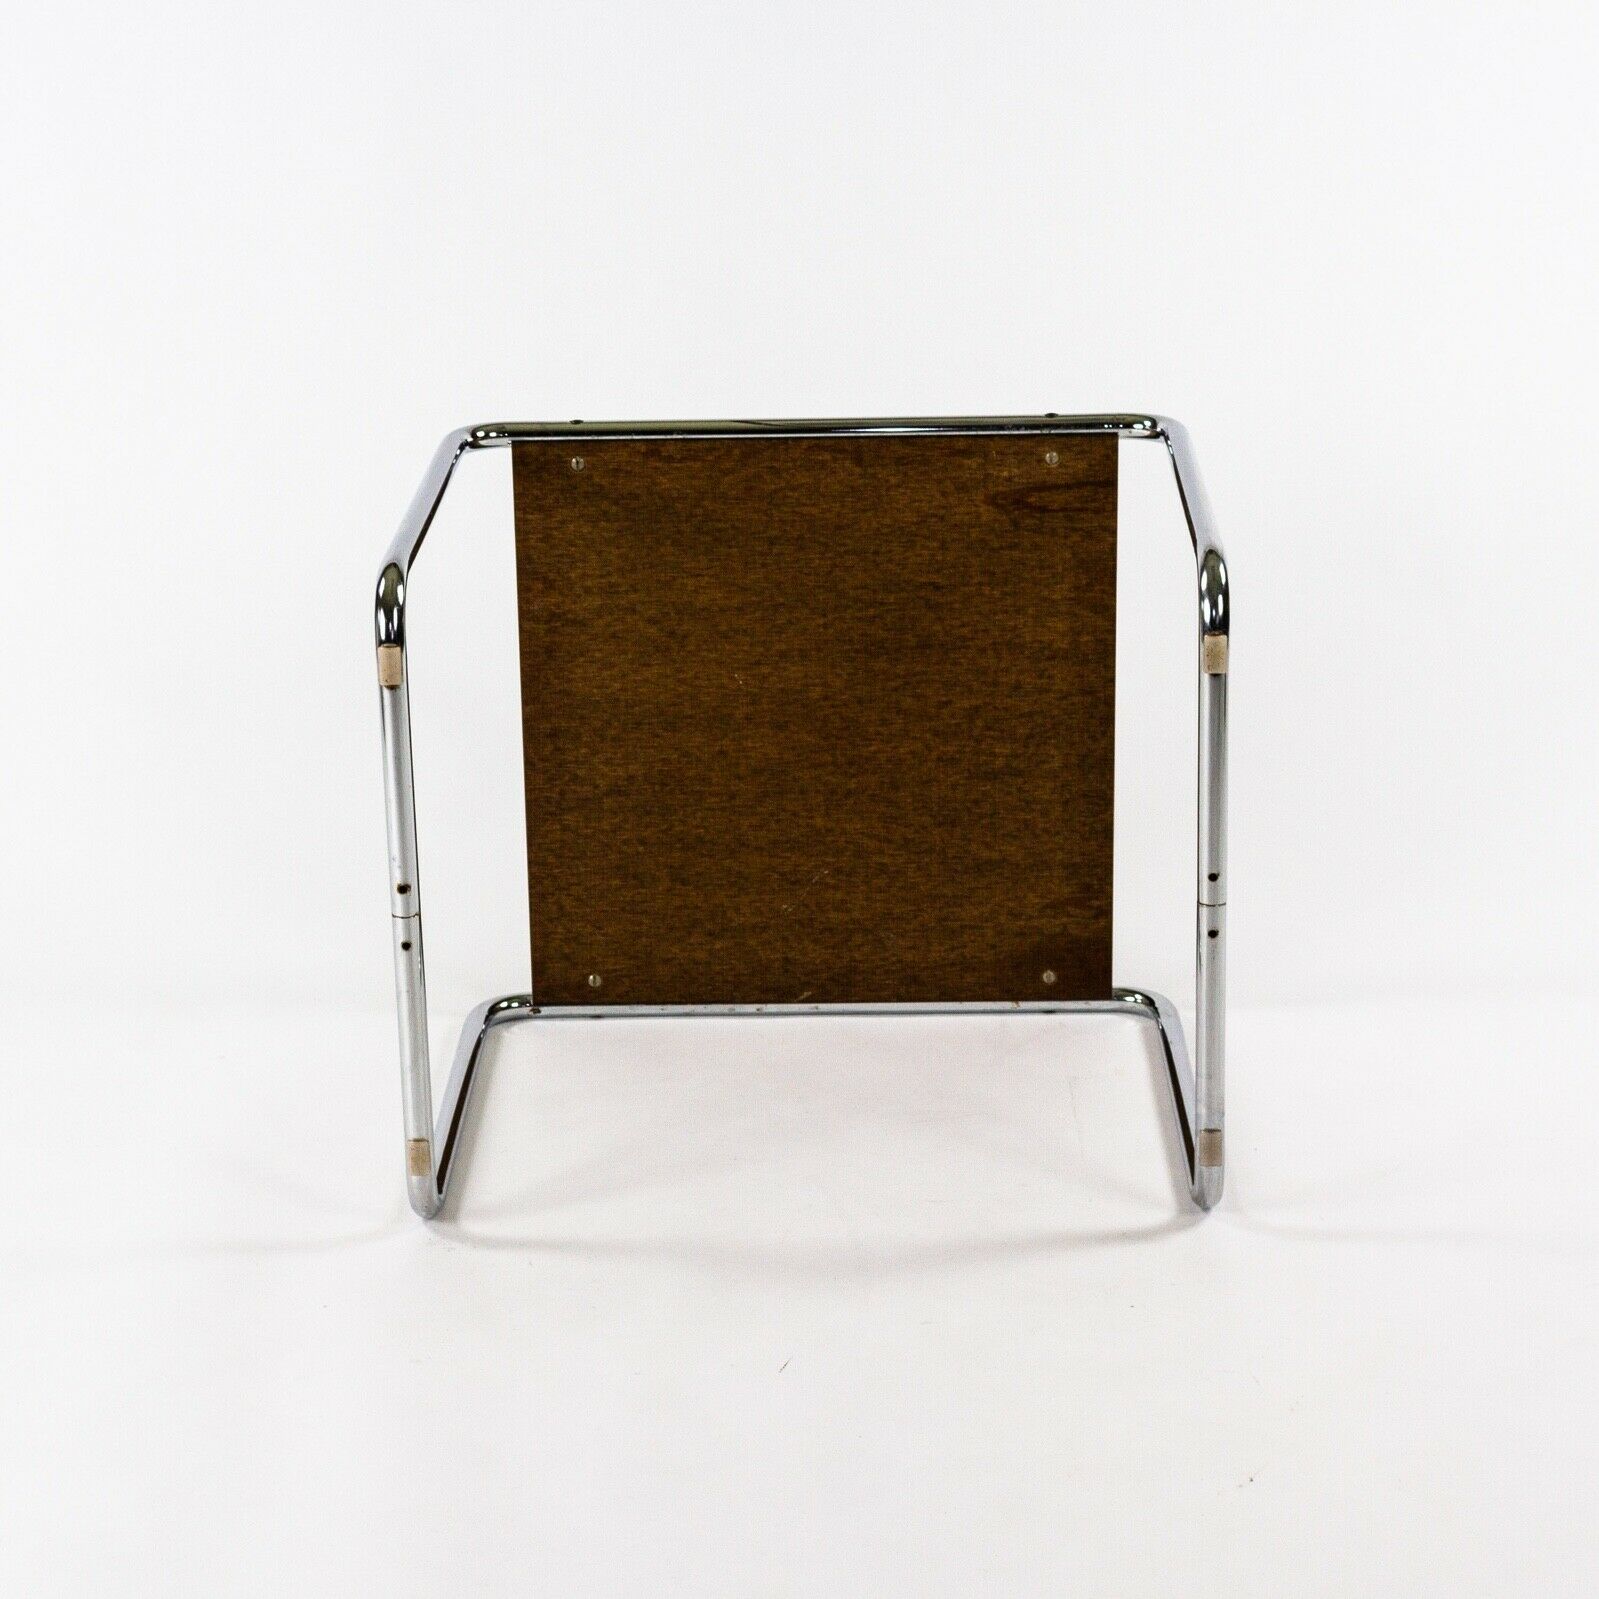 SOLD 1960s Marcel Breuer for Knoll / Gavina Laccio Side / End Table in Black Laminate